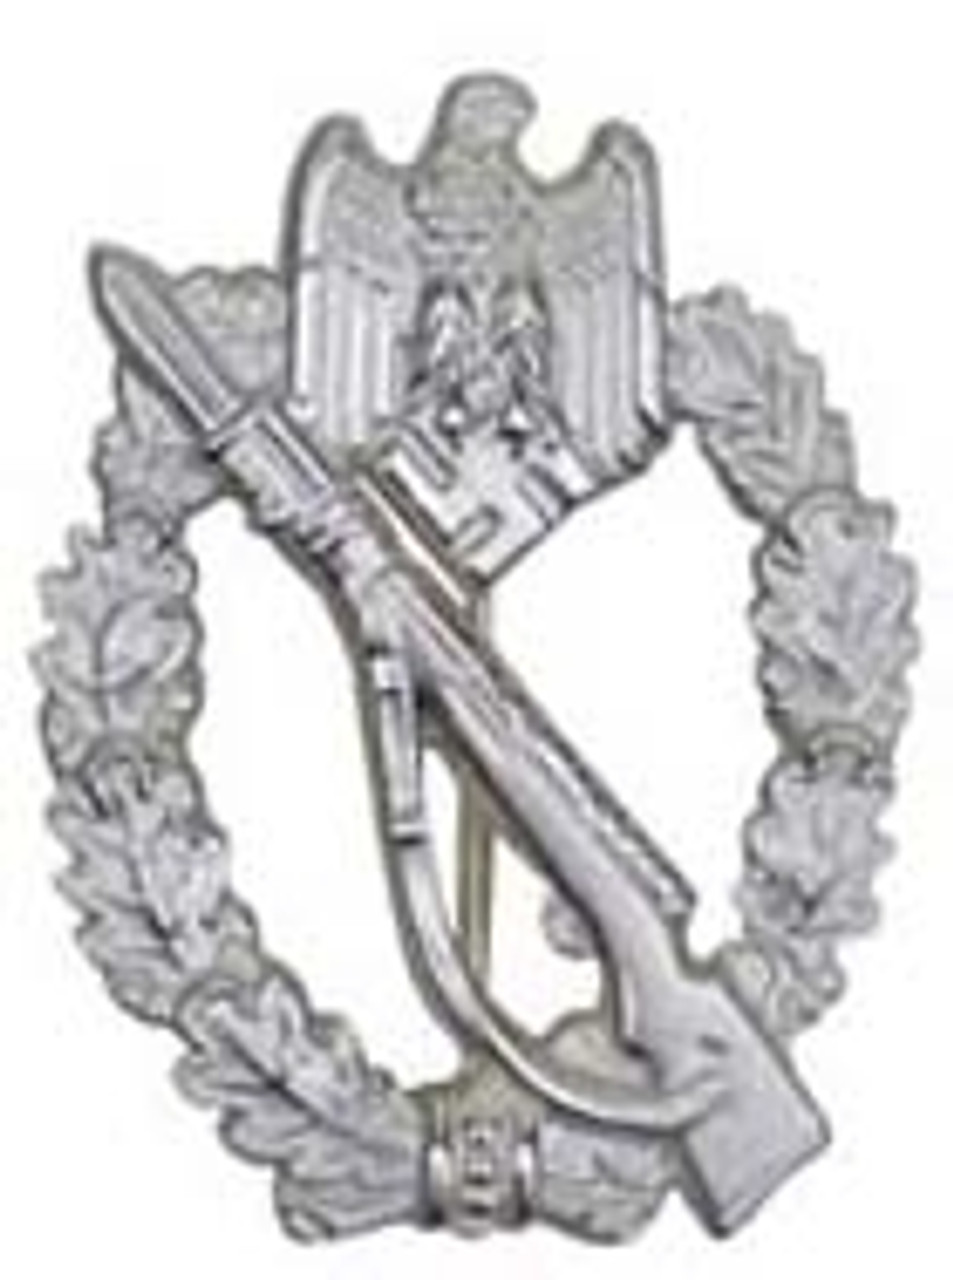 Infantry Assault Badge - Silver (Infanterie-Sturmabzeichen) from Hessen Antique